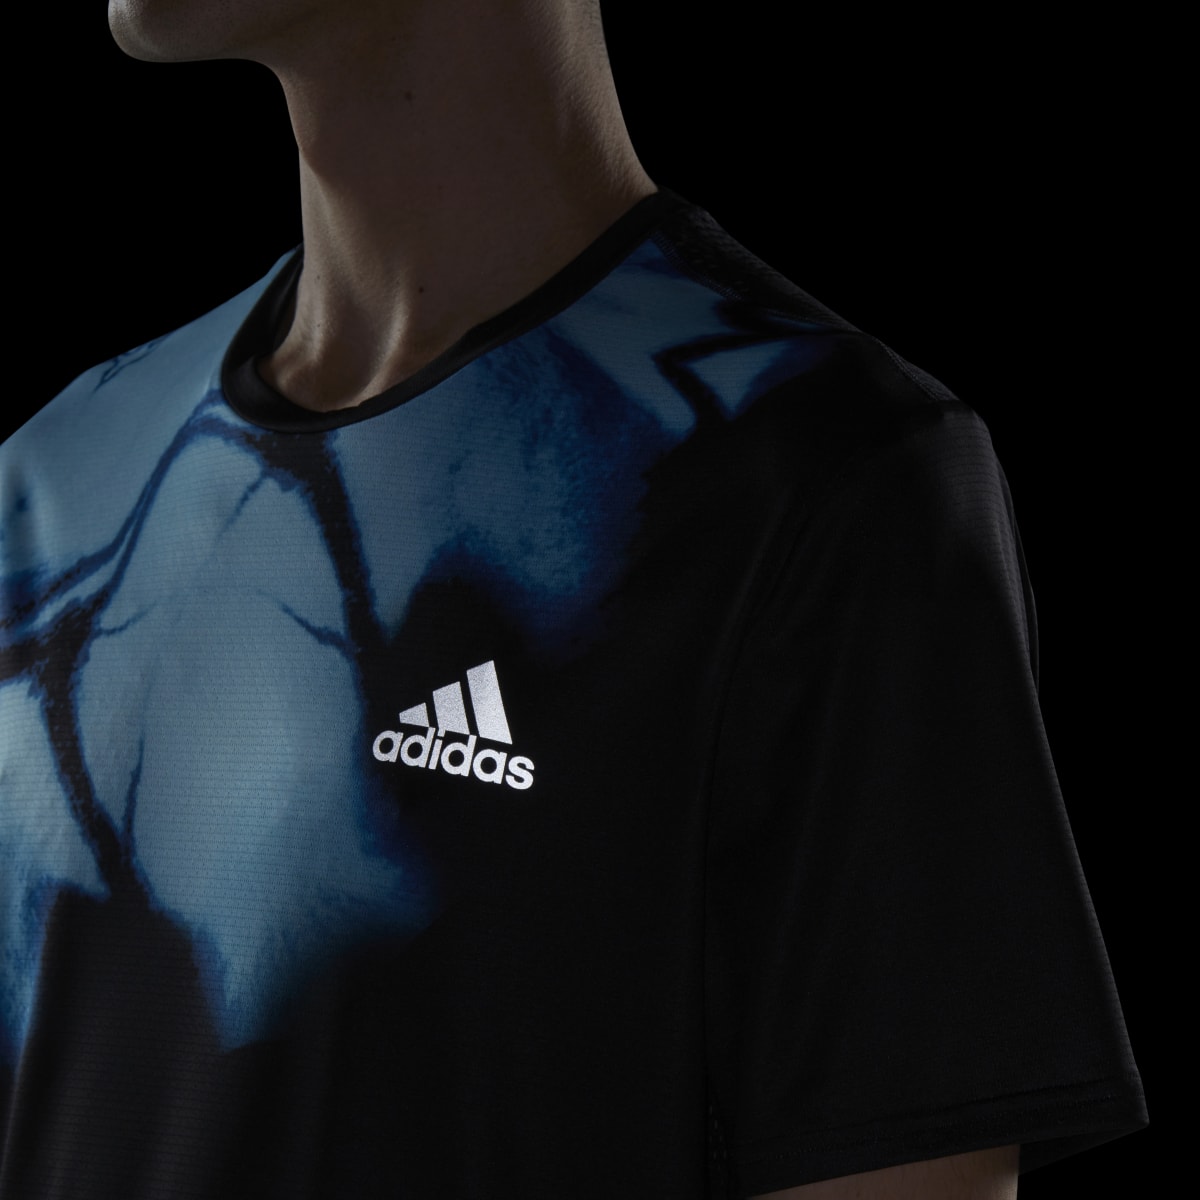 Adidas Fast Graphic T-Shirt. 5